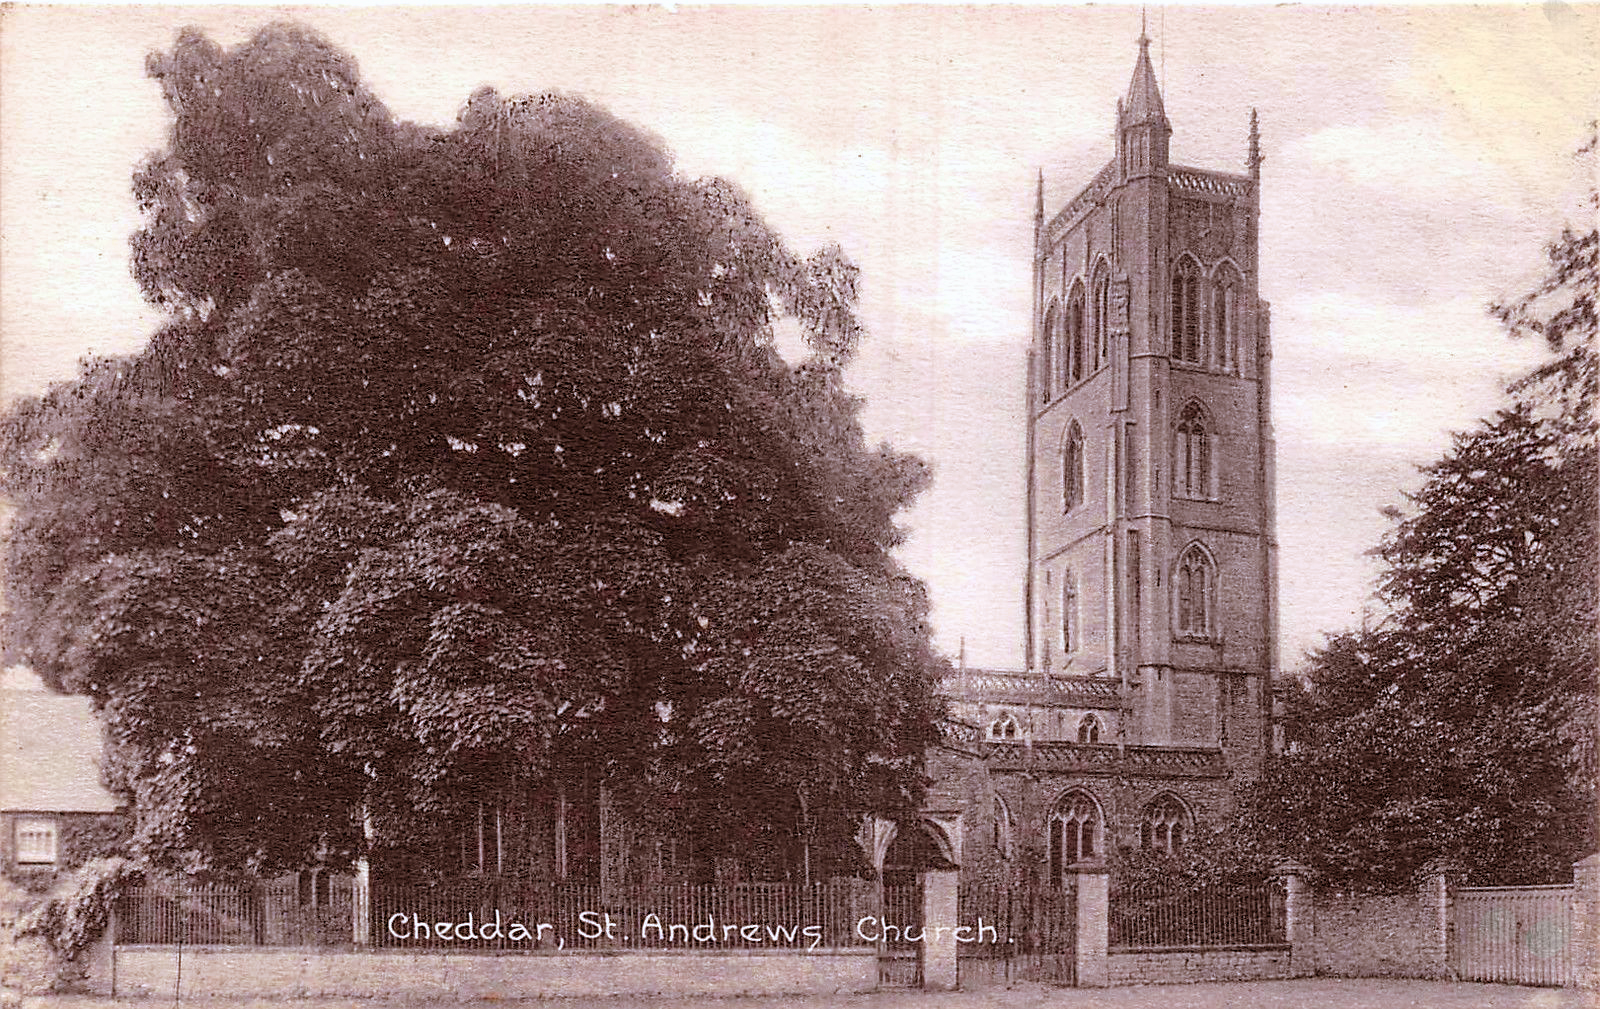 St. Andrews, Cheddar